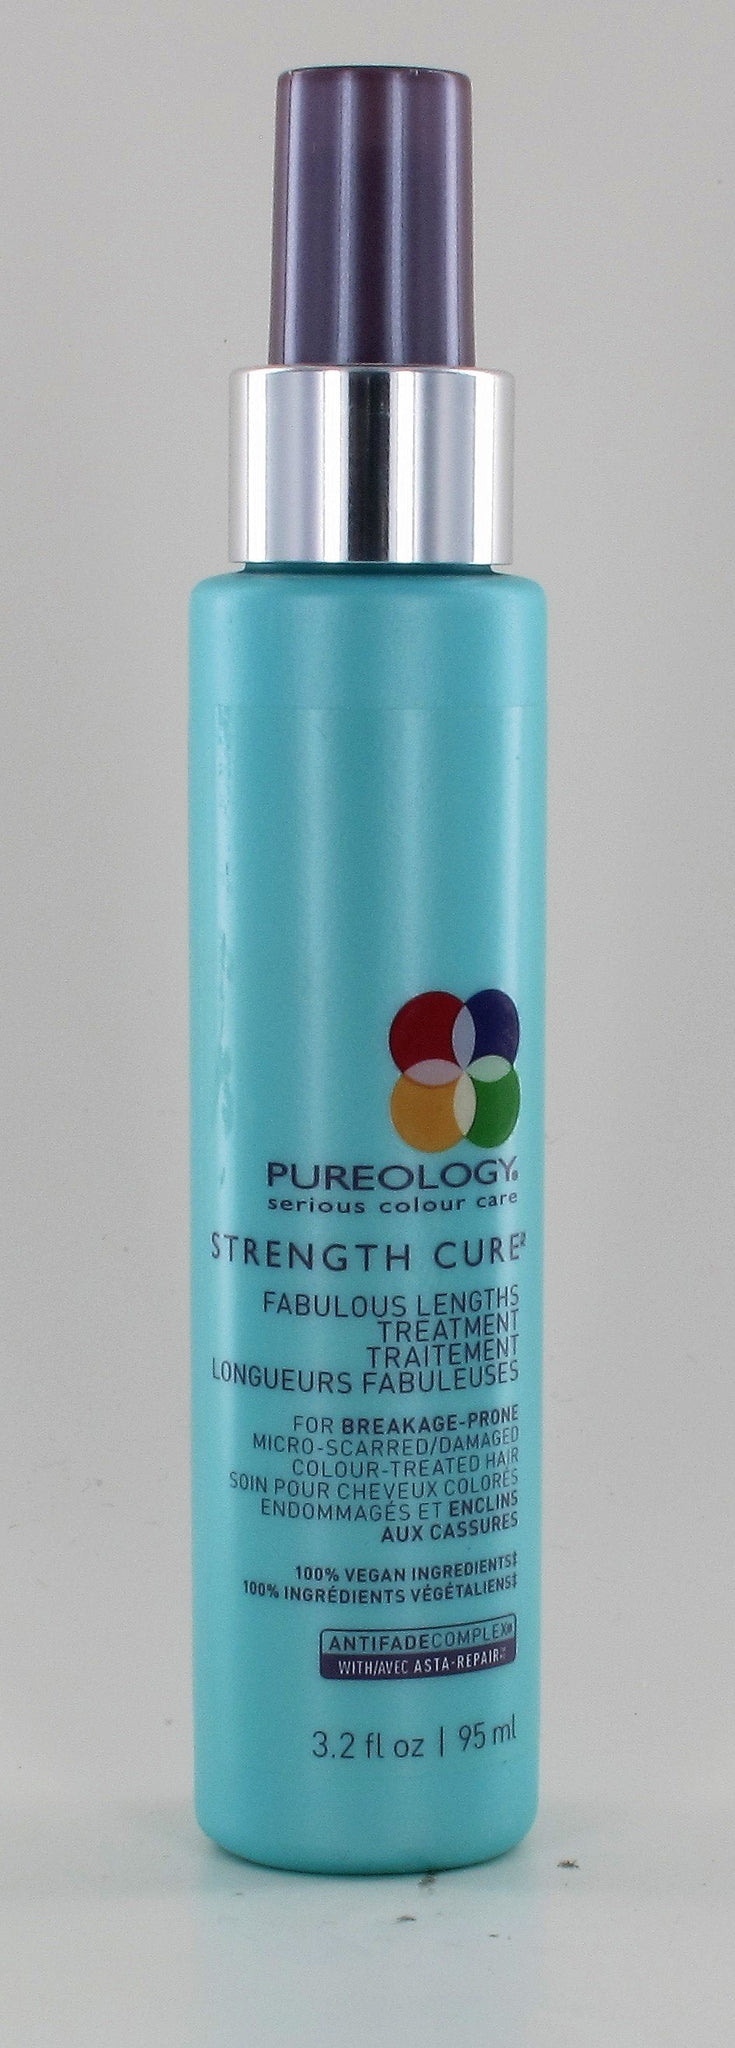 Pureology Strength Cure Fabulous Lengths Treatment 3.2 oz